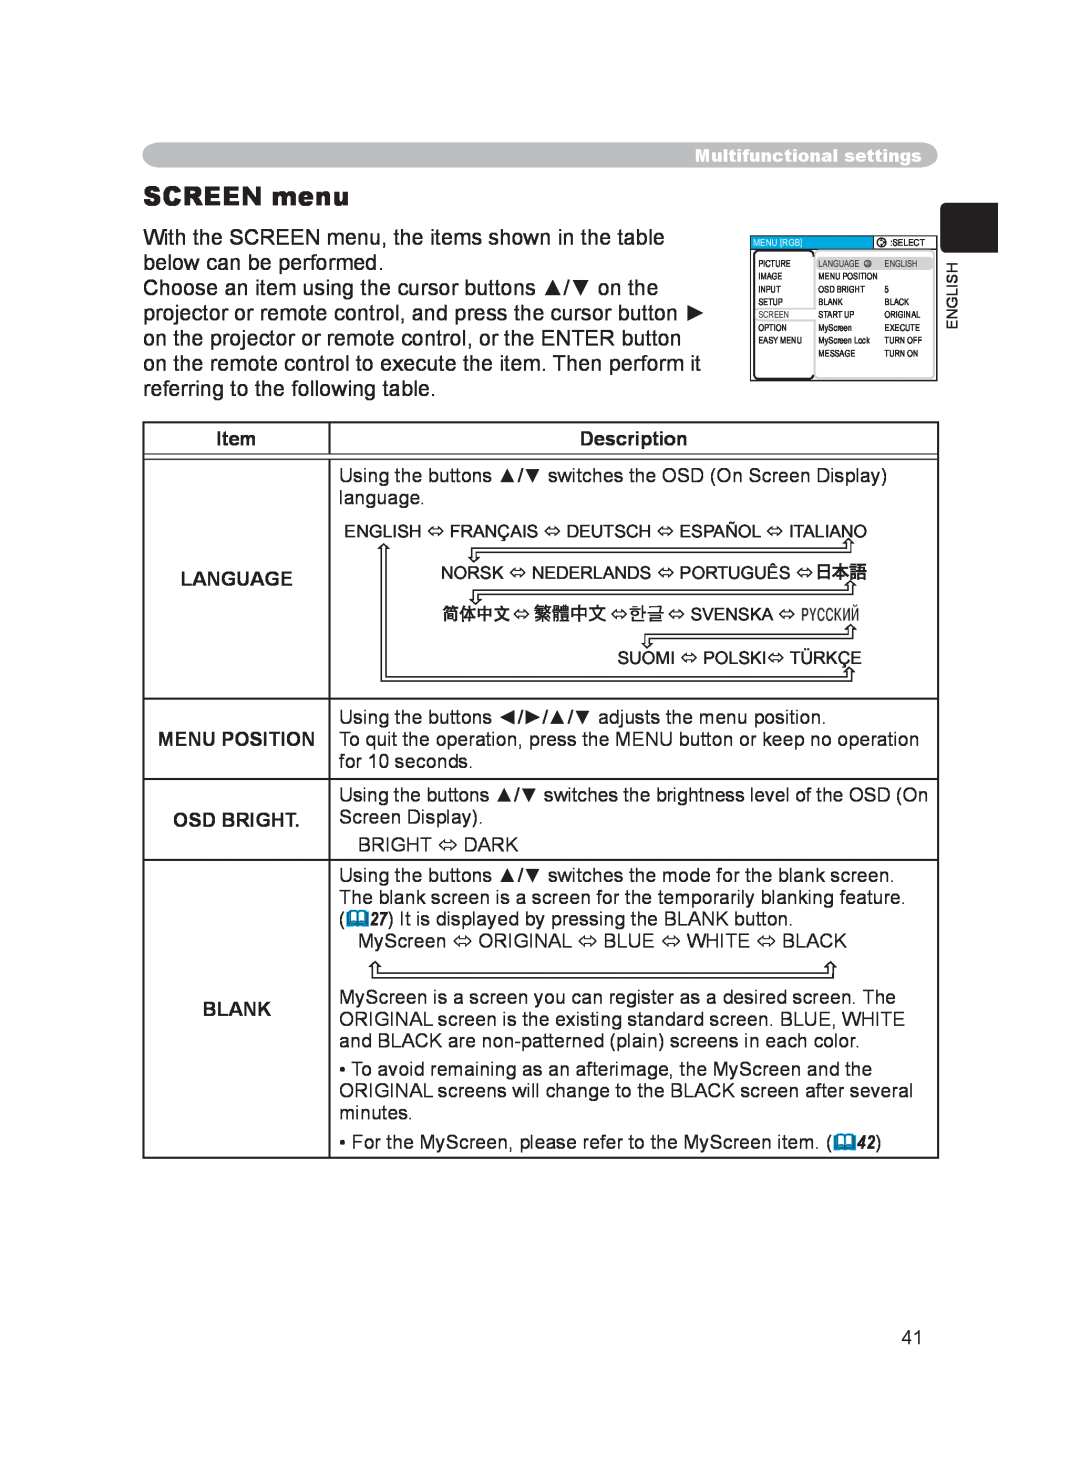 Hitachi PJ-LC9 user manual SCREEN menu, Description, Language, Menu Position, Osd Bright, Blank 